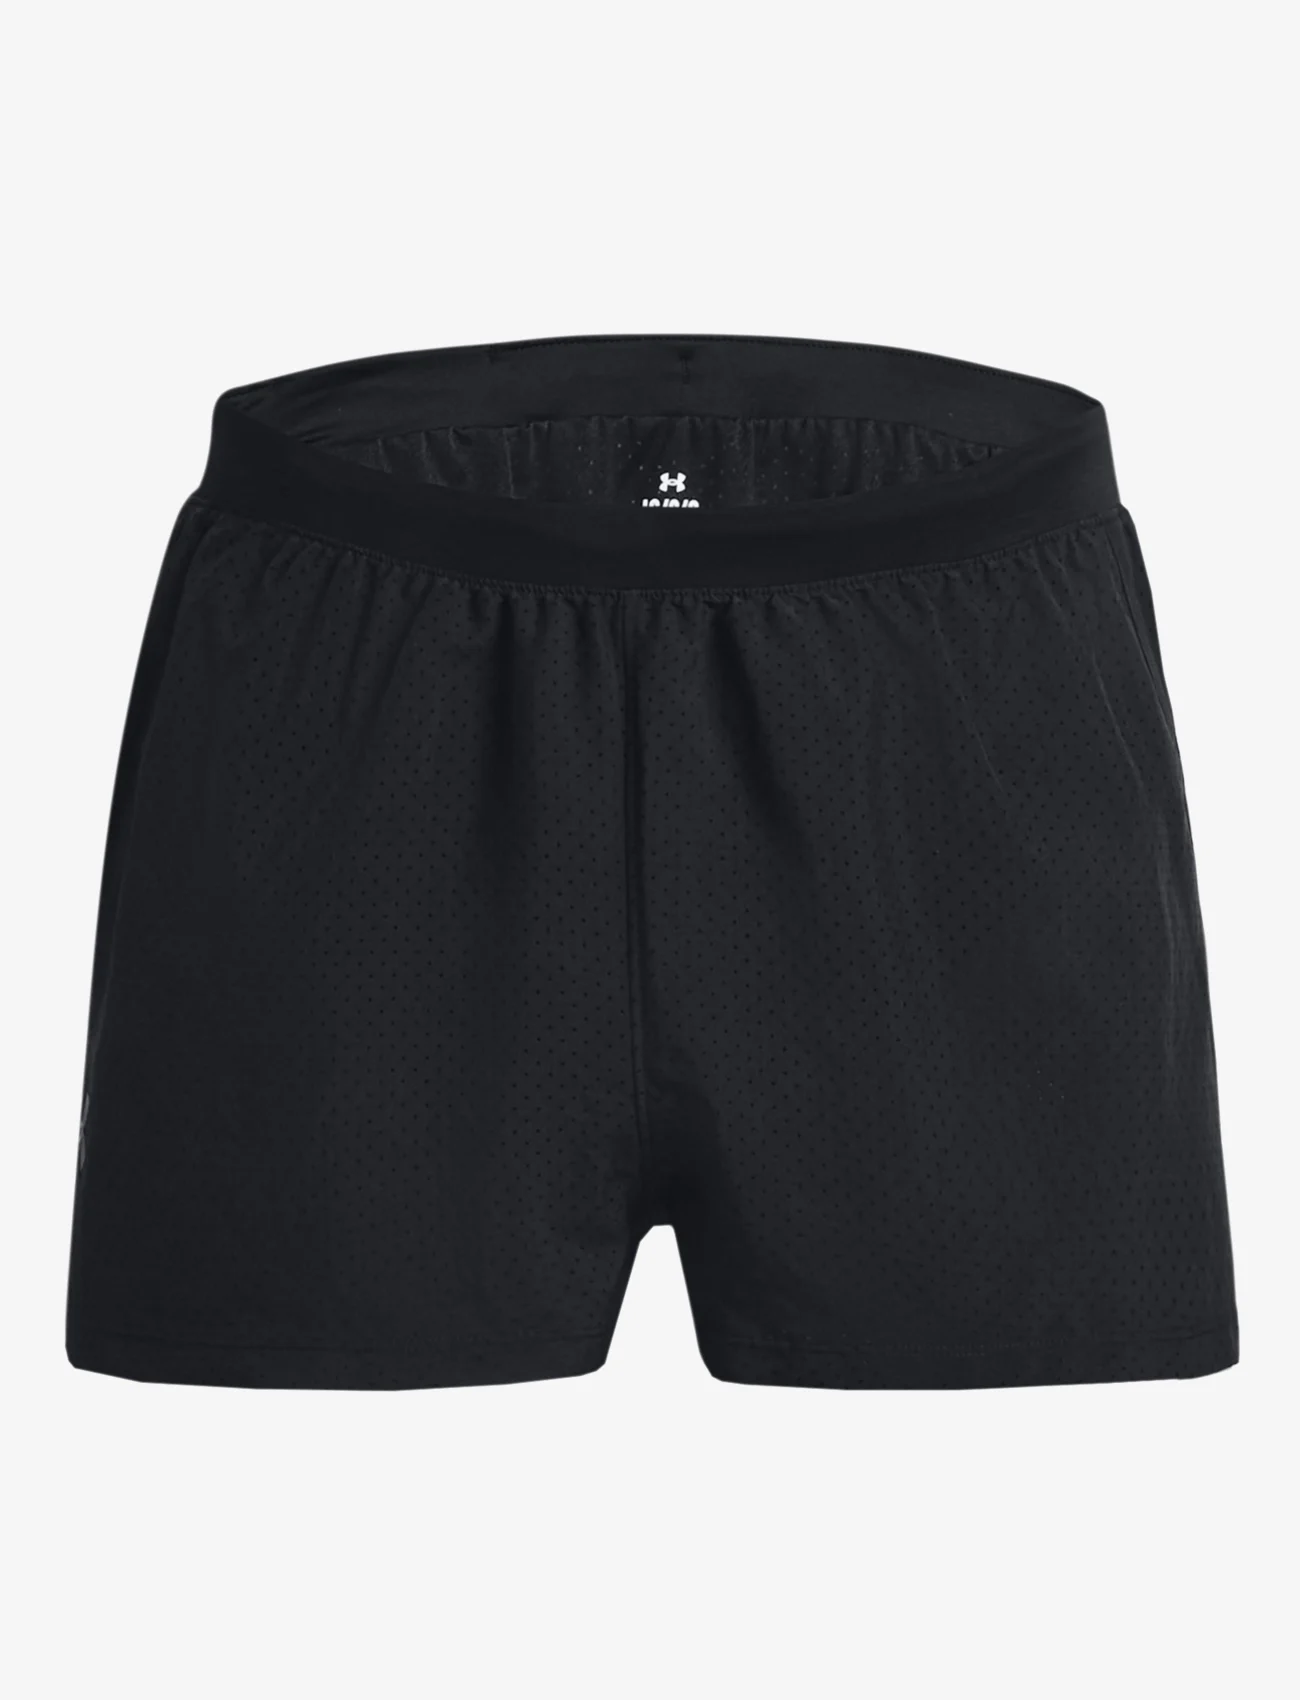 Under Armour - UA LAUNCH SPLIT PERF SHORT - training shorts - black - 0